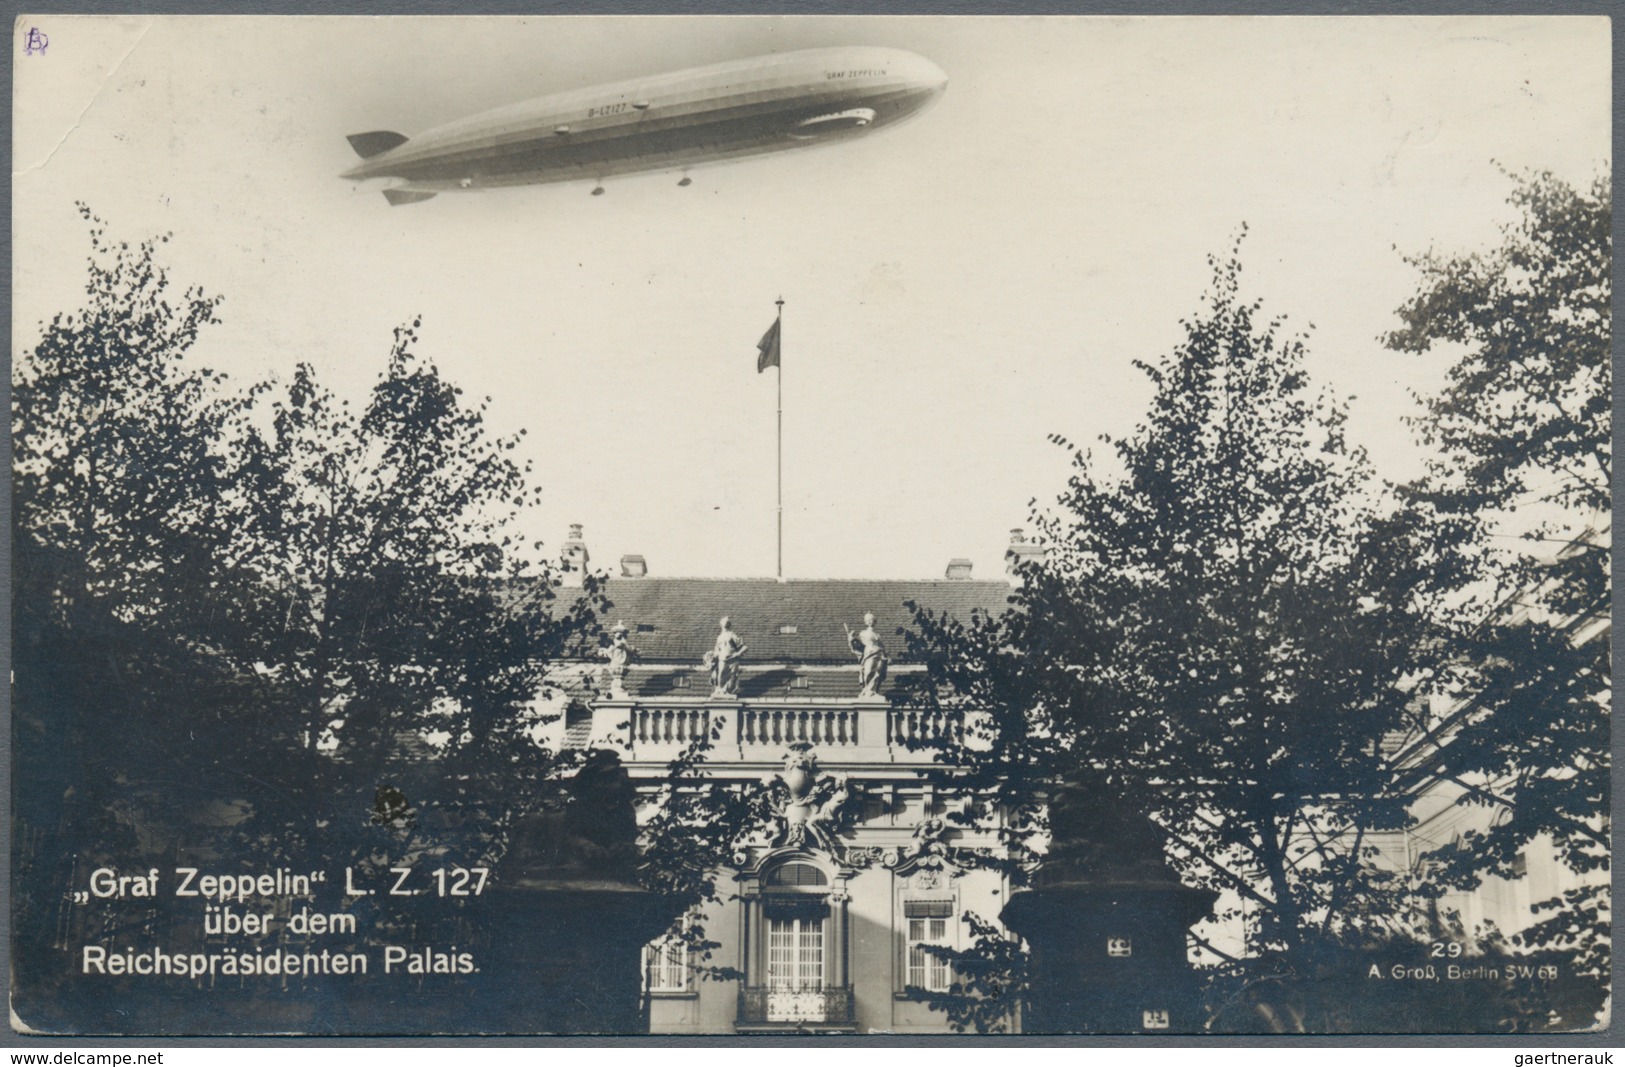 Zeppelinpost Deutschland: 1929. Real Photo Postcard (RPPC) Showing The Graf Zeppelin Airship Flying - Luft- Und Zeppelinpost